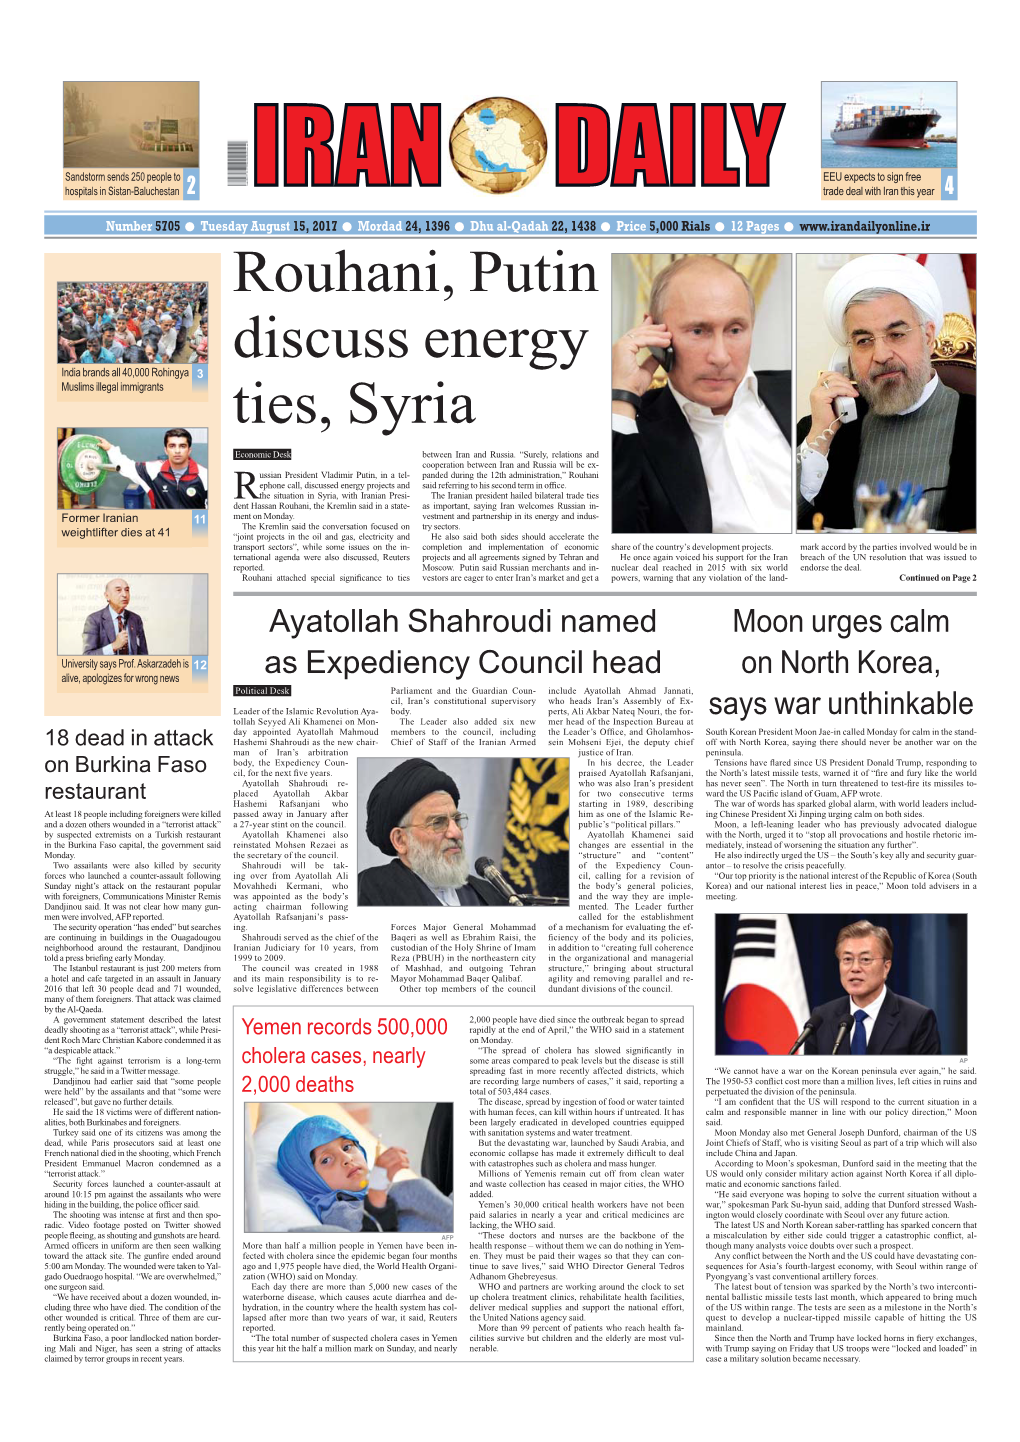 Rouhani, Putin Discuss Energy Ties, Syria